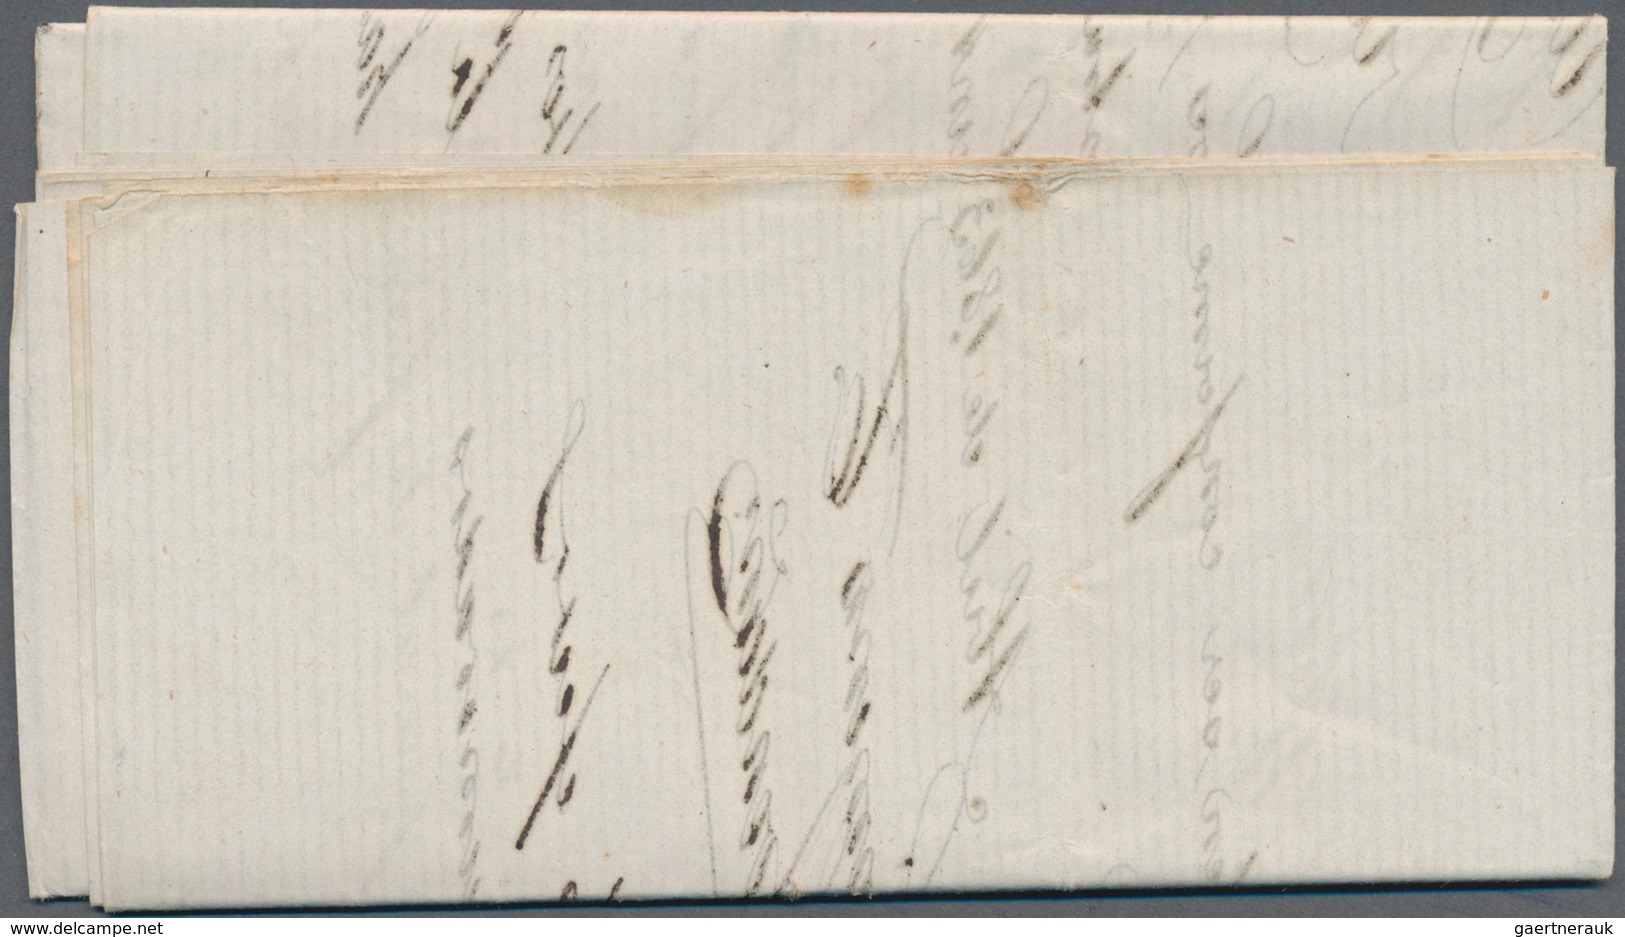 Kolumbien: 1863, Stampless Entire Letter, Dated 27 April, Addresse To Lanman & Kemp, Merchants In NE - Colombia